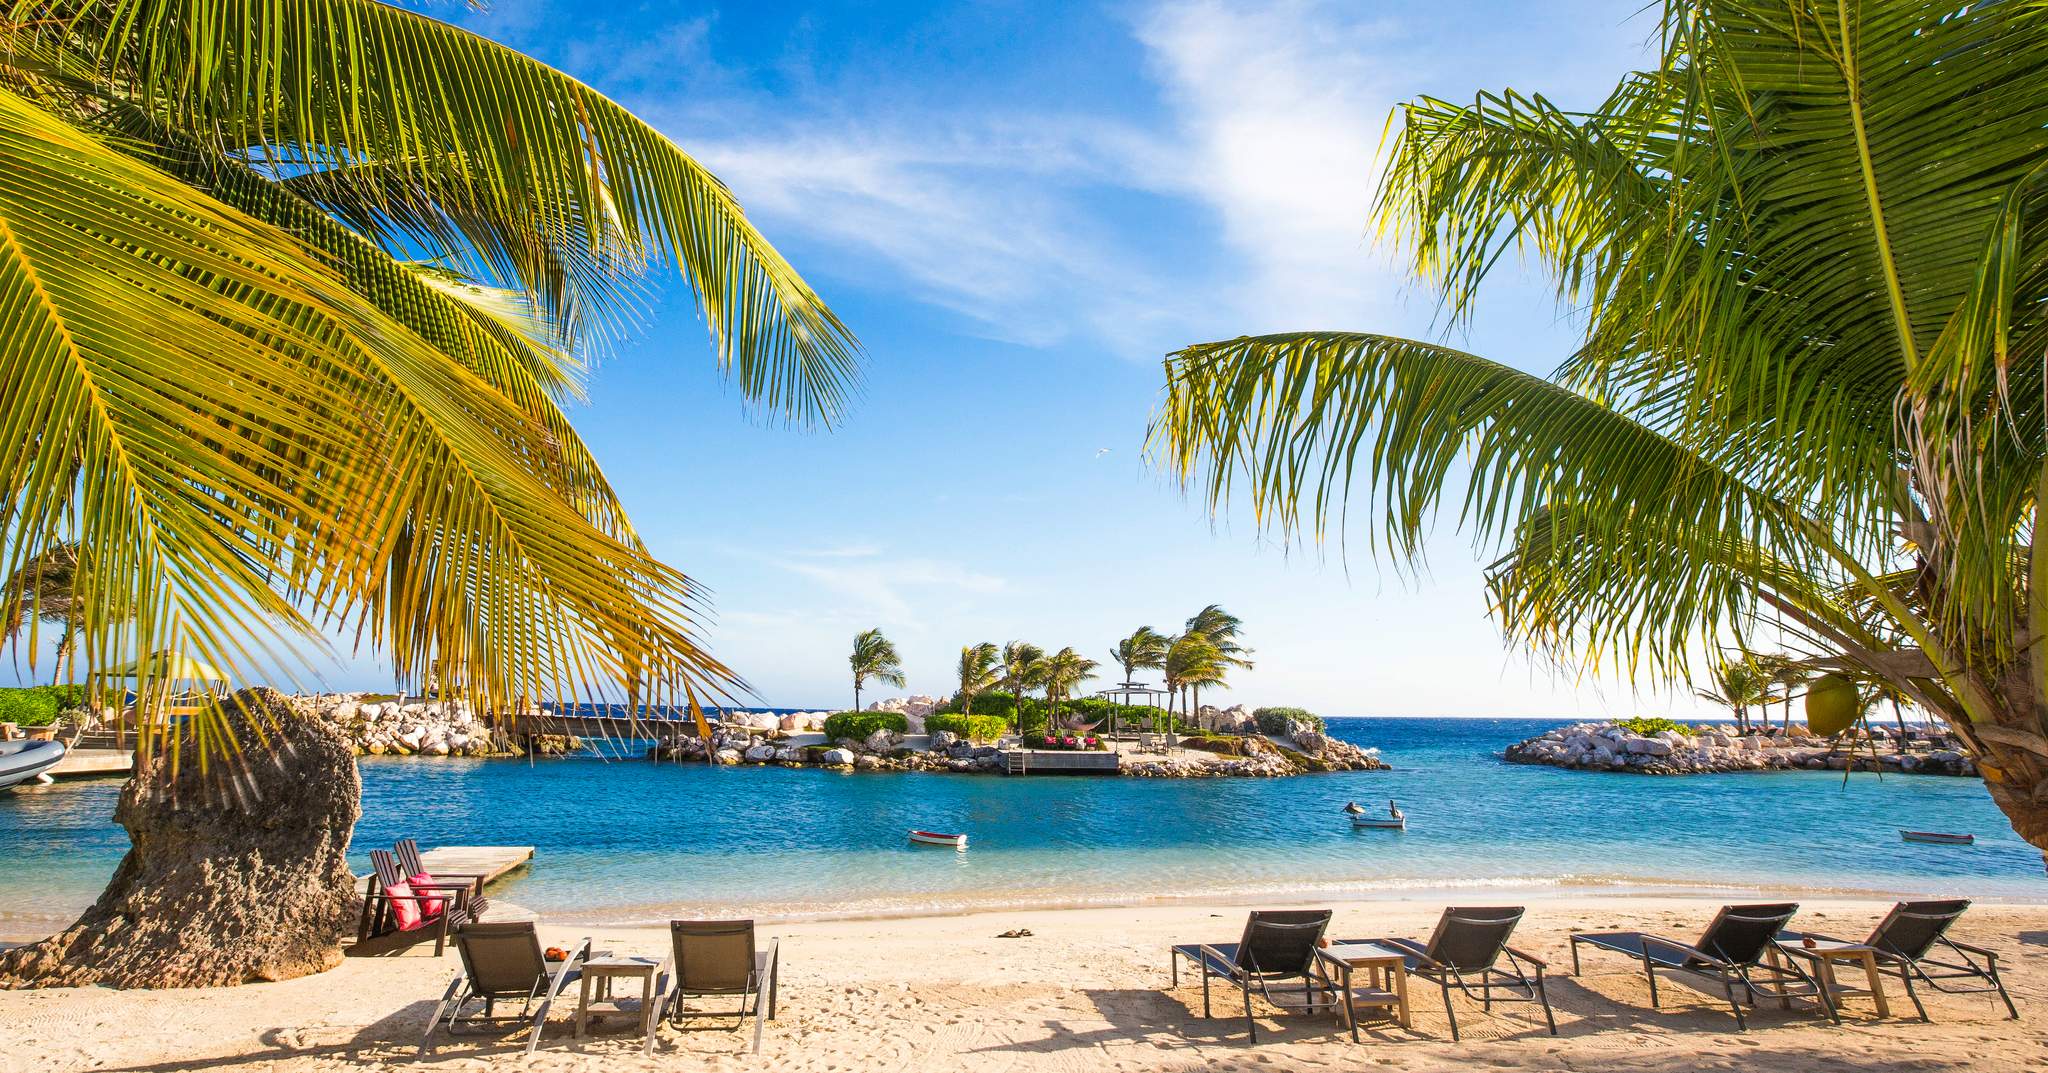 Baoase Luxury Resort in Willemstad Curacao